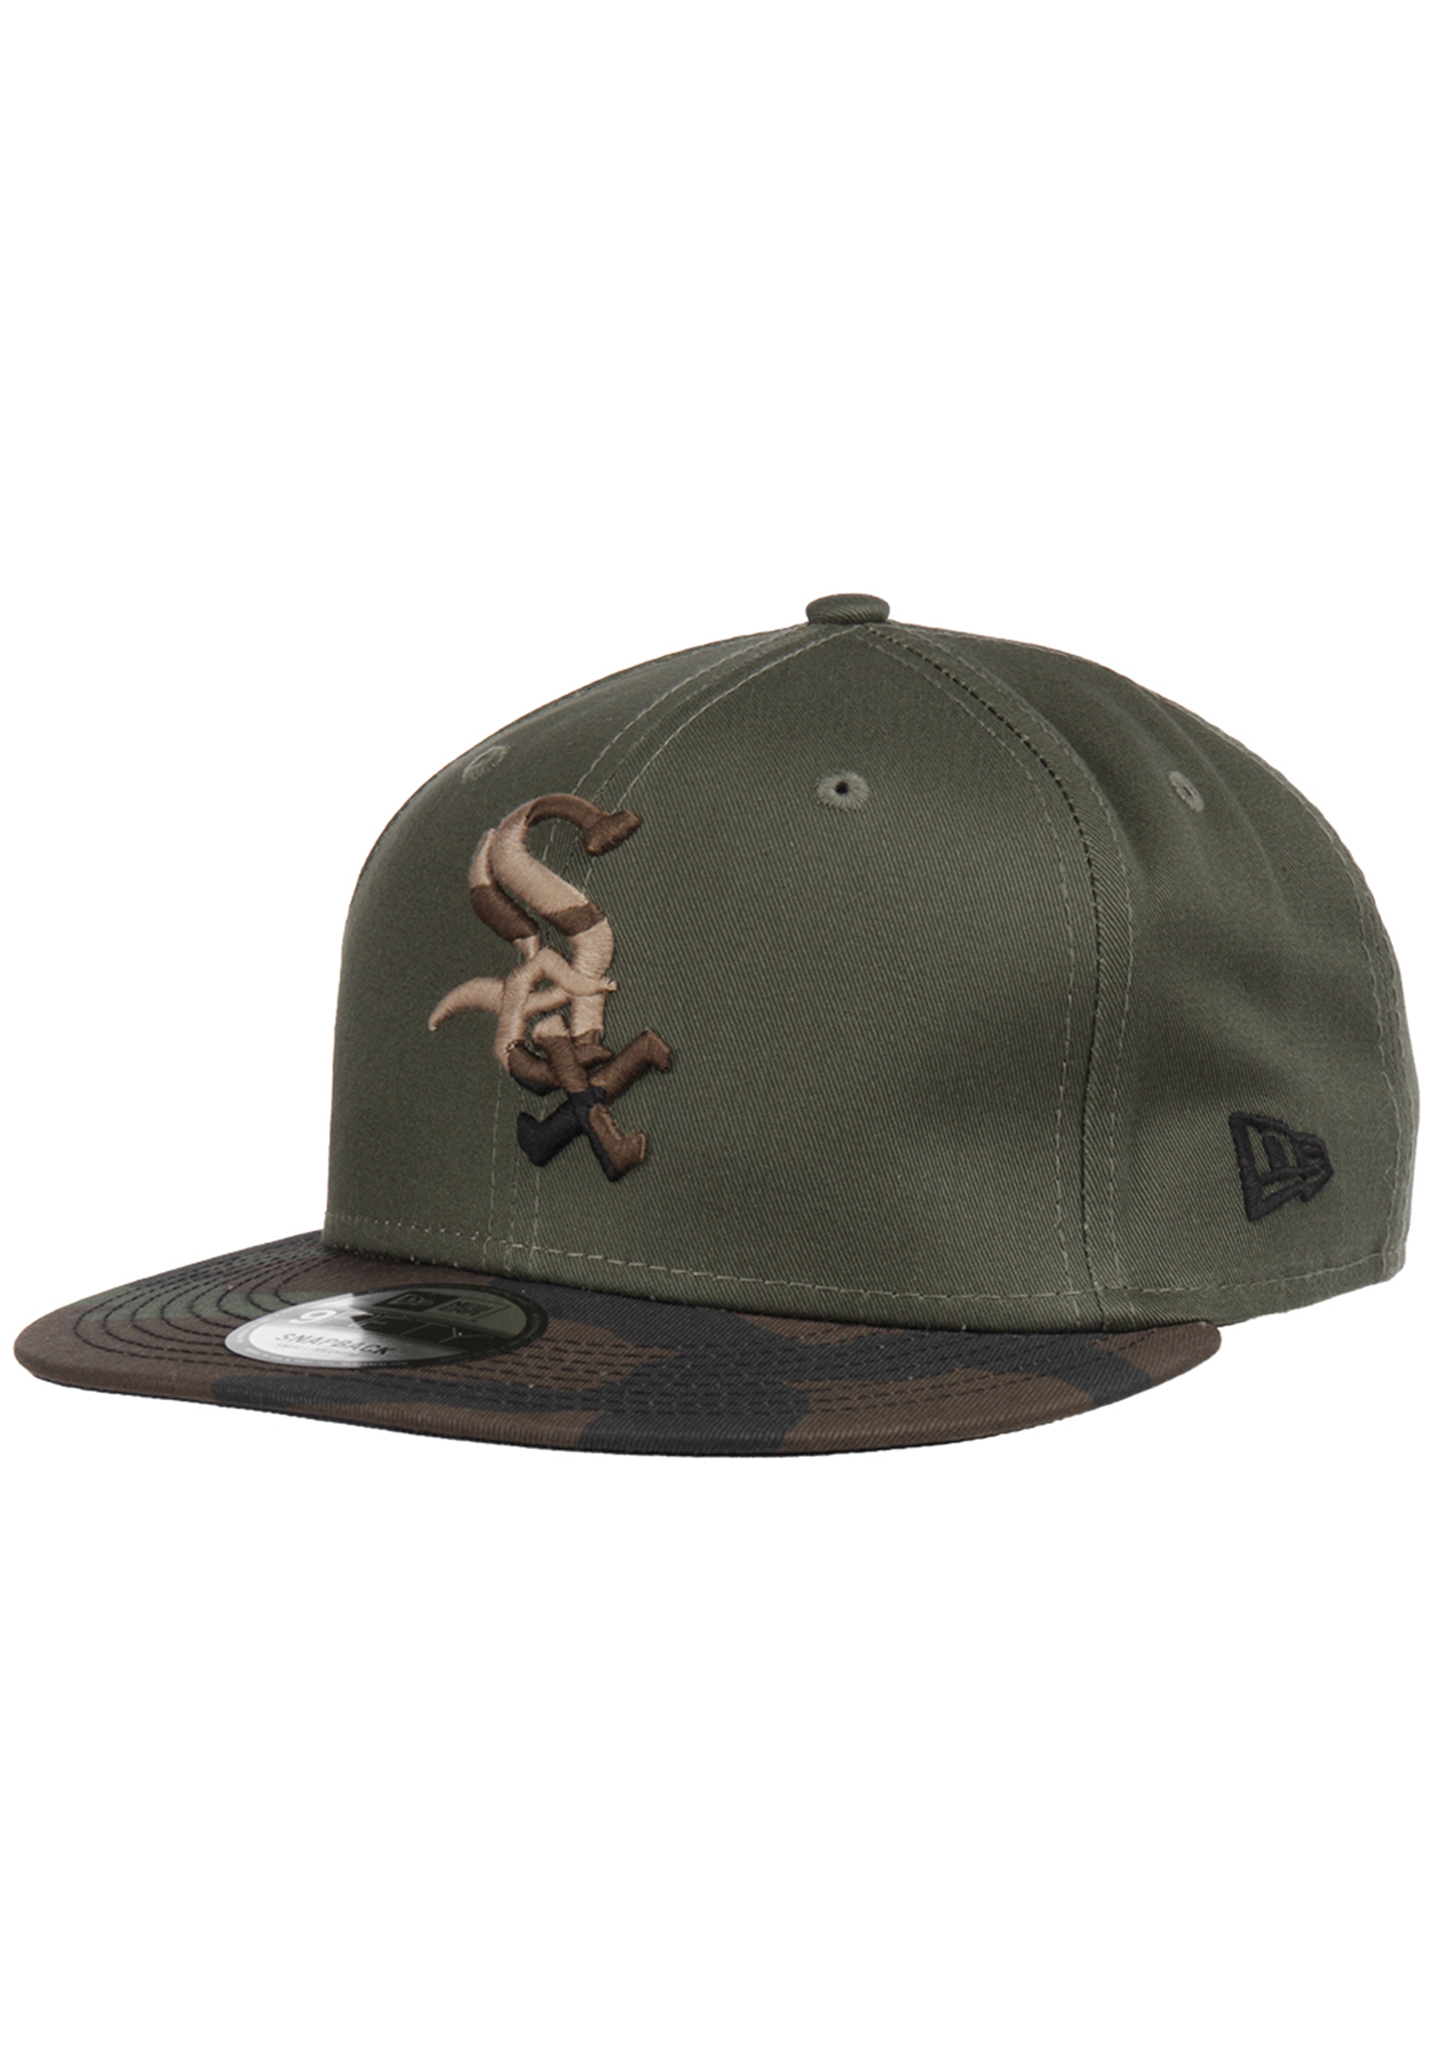 New Era 9Fifty Chicago White Sox Caps neu oliv/woodland camo S/M